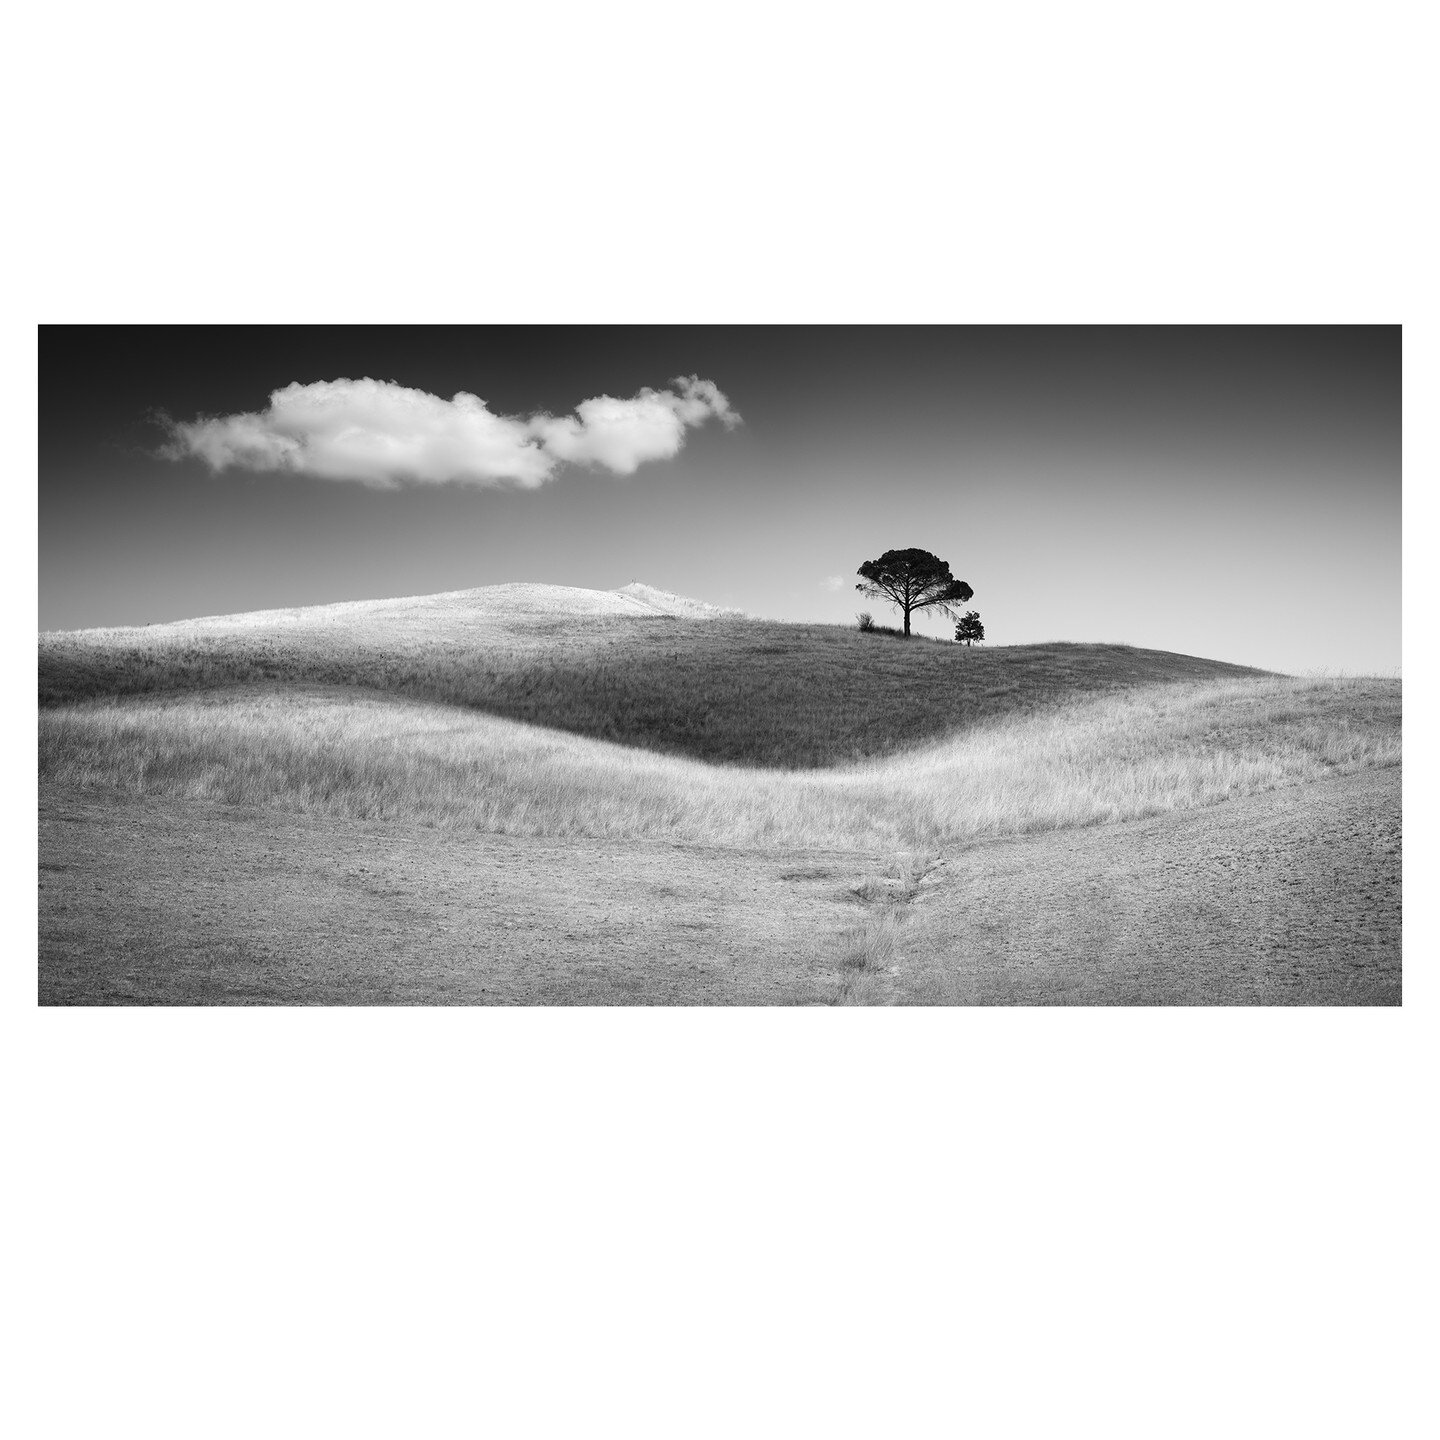 Italian Stone Pines Study 1, Tuscany
.
.
#landscapephotography
#mediumformatphotography
#blackandwhitephotography
#panorama 
#blackandwhite
#bnw
#monochrome
#monoart
#bw
#monotone
#monochromatic
#fineart_photobw
#geraldberghammer
#hasselblad_official